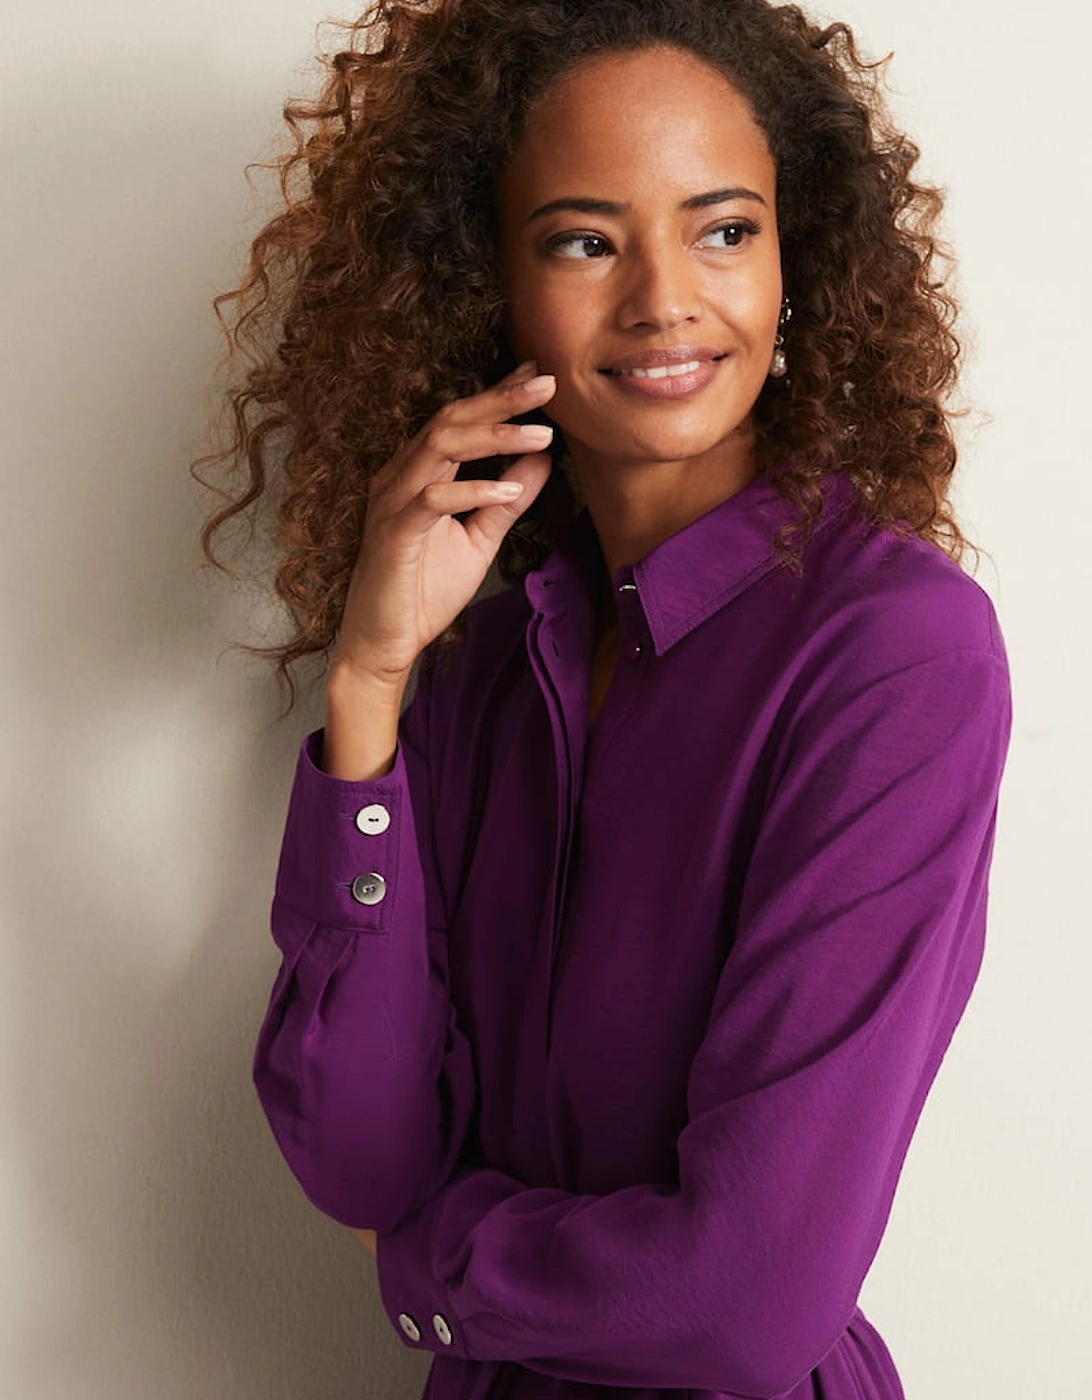 Jayden Purple Shirt Midaxi Dress